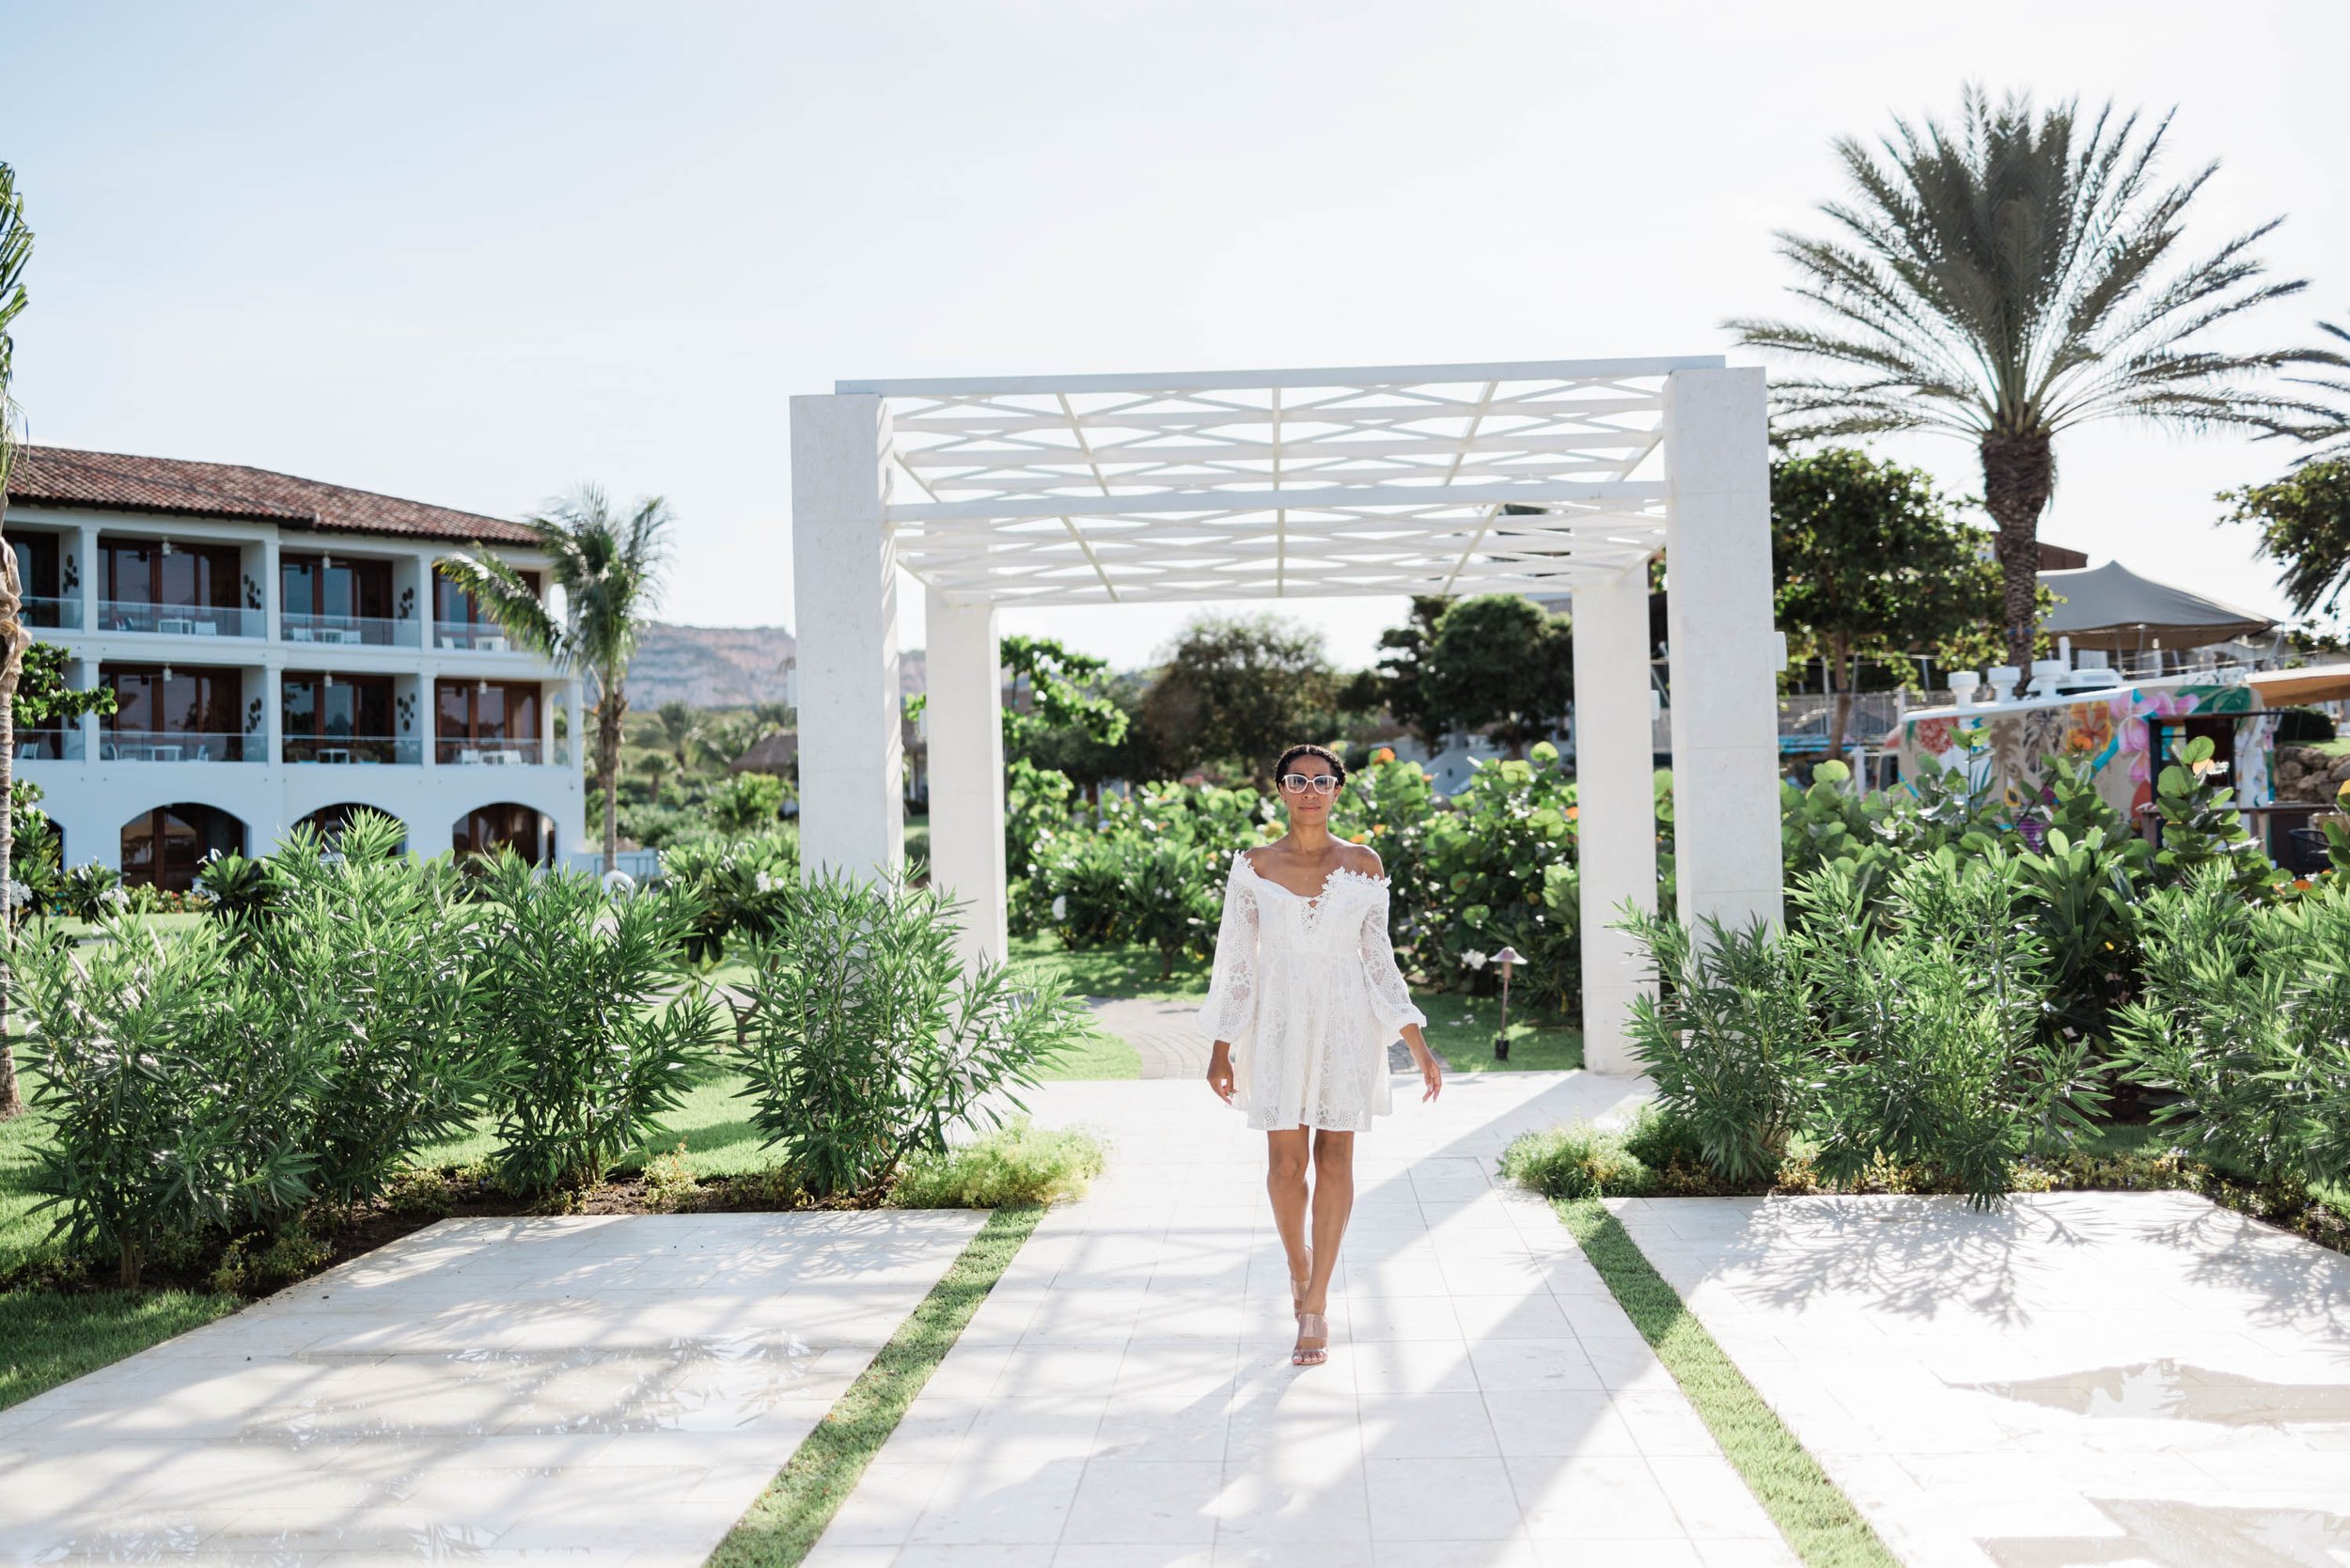 Sandals Royal Curacao Destination Wedding Photographers Megapixels Media Review-6.jpg